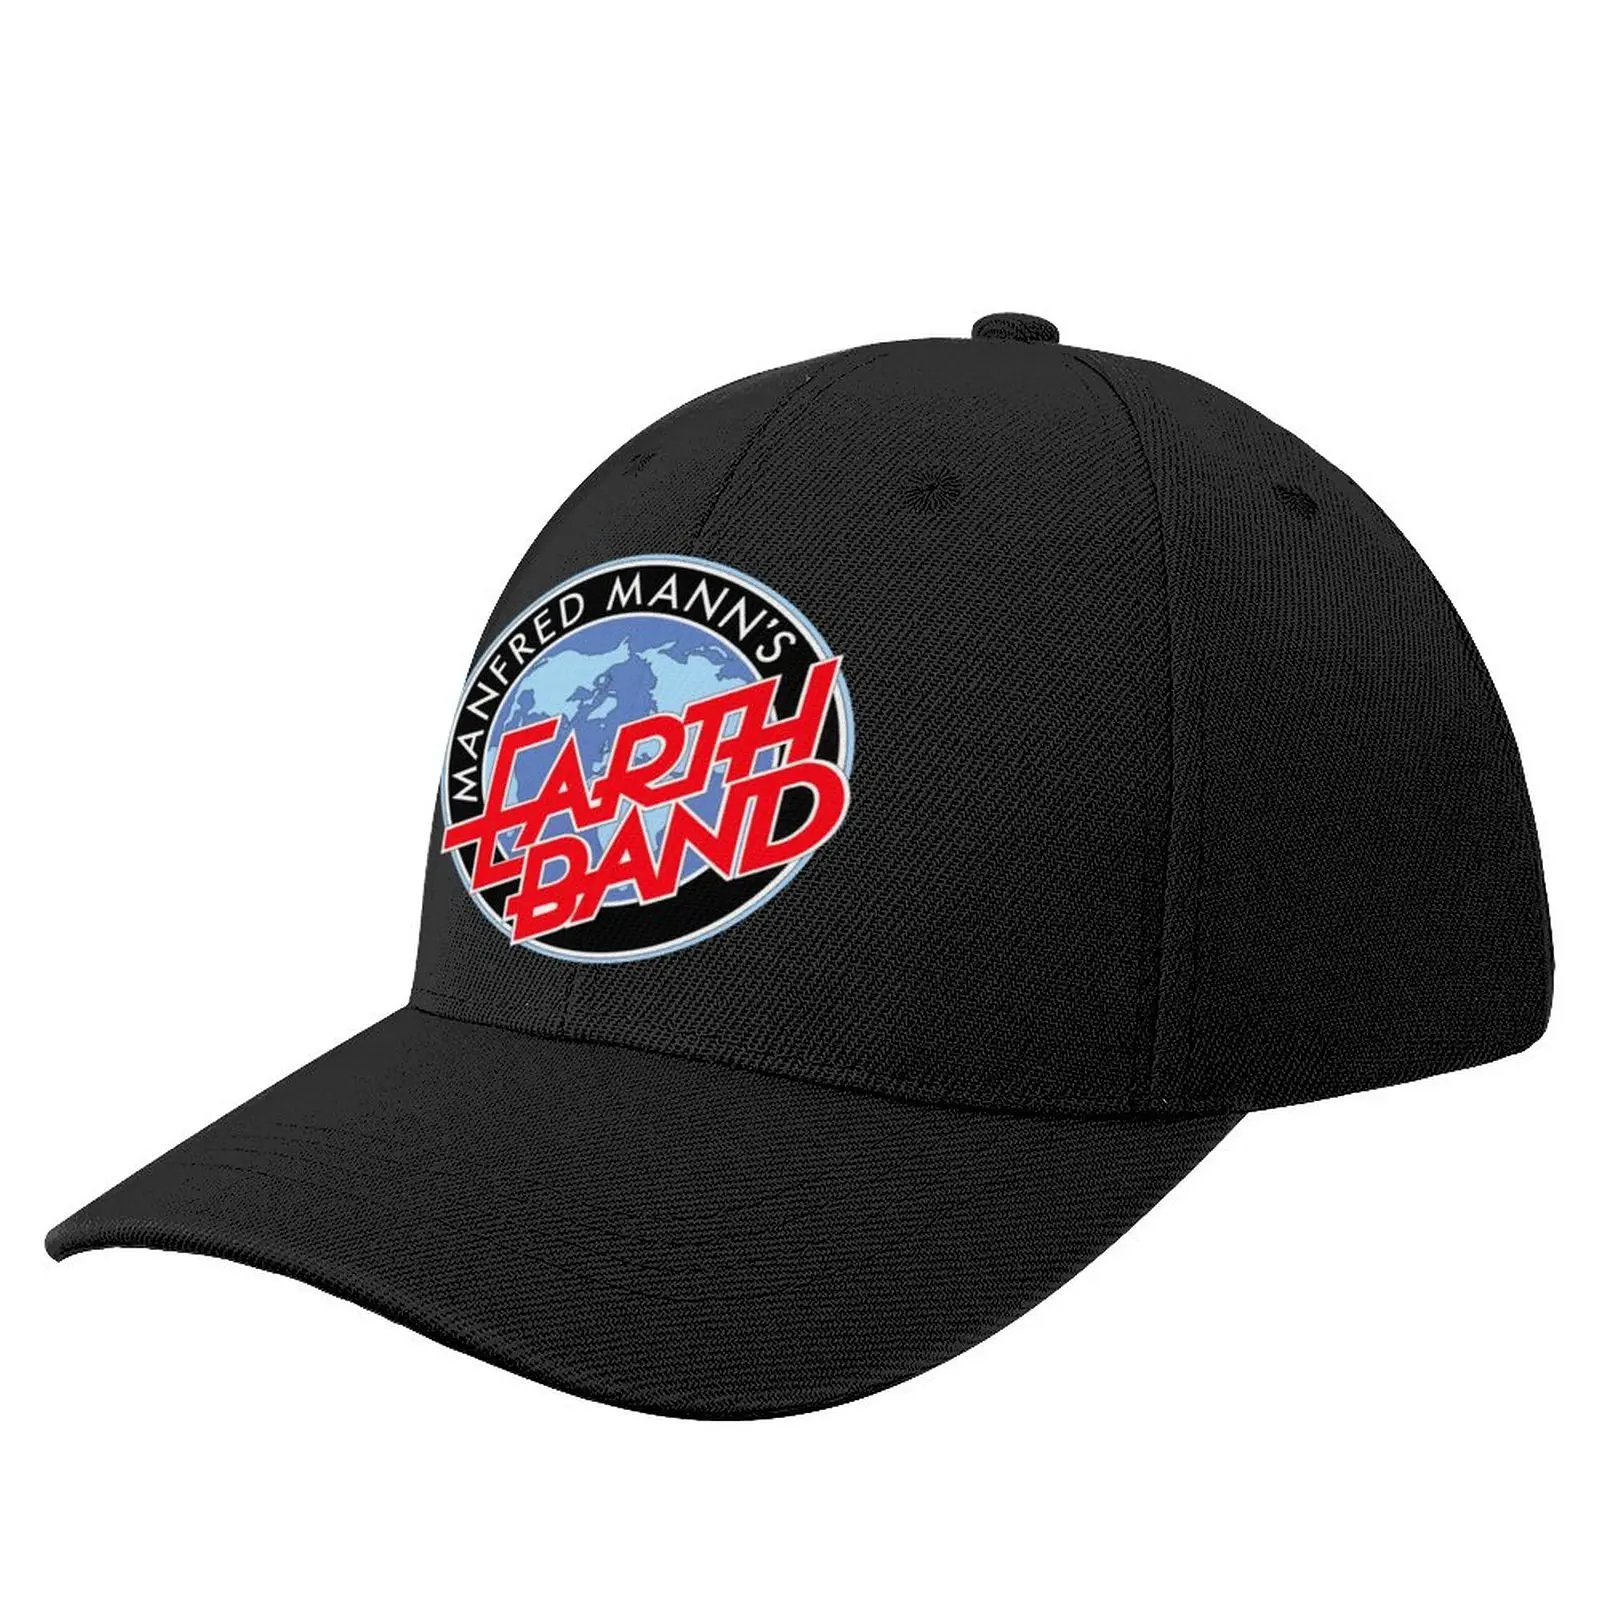 

Manfred Manns Earth Band For Men For Women Classic Retro Customize Baseball Cap Golf Wear summer hats black Hat For Men Women'S